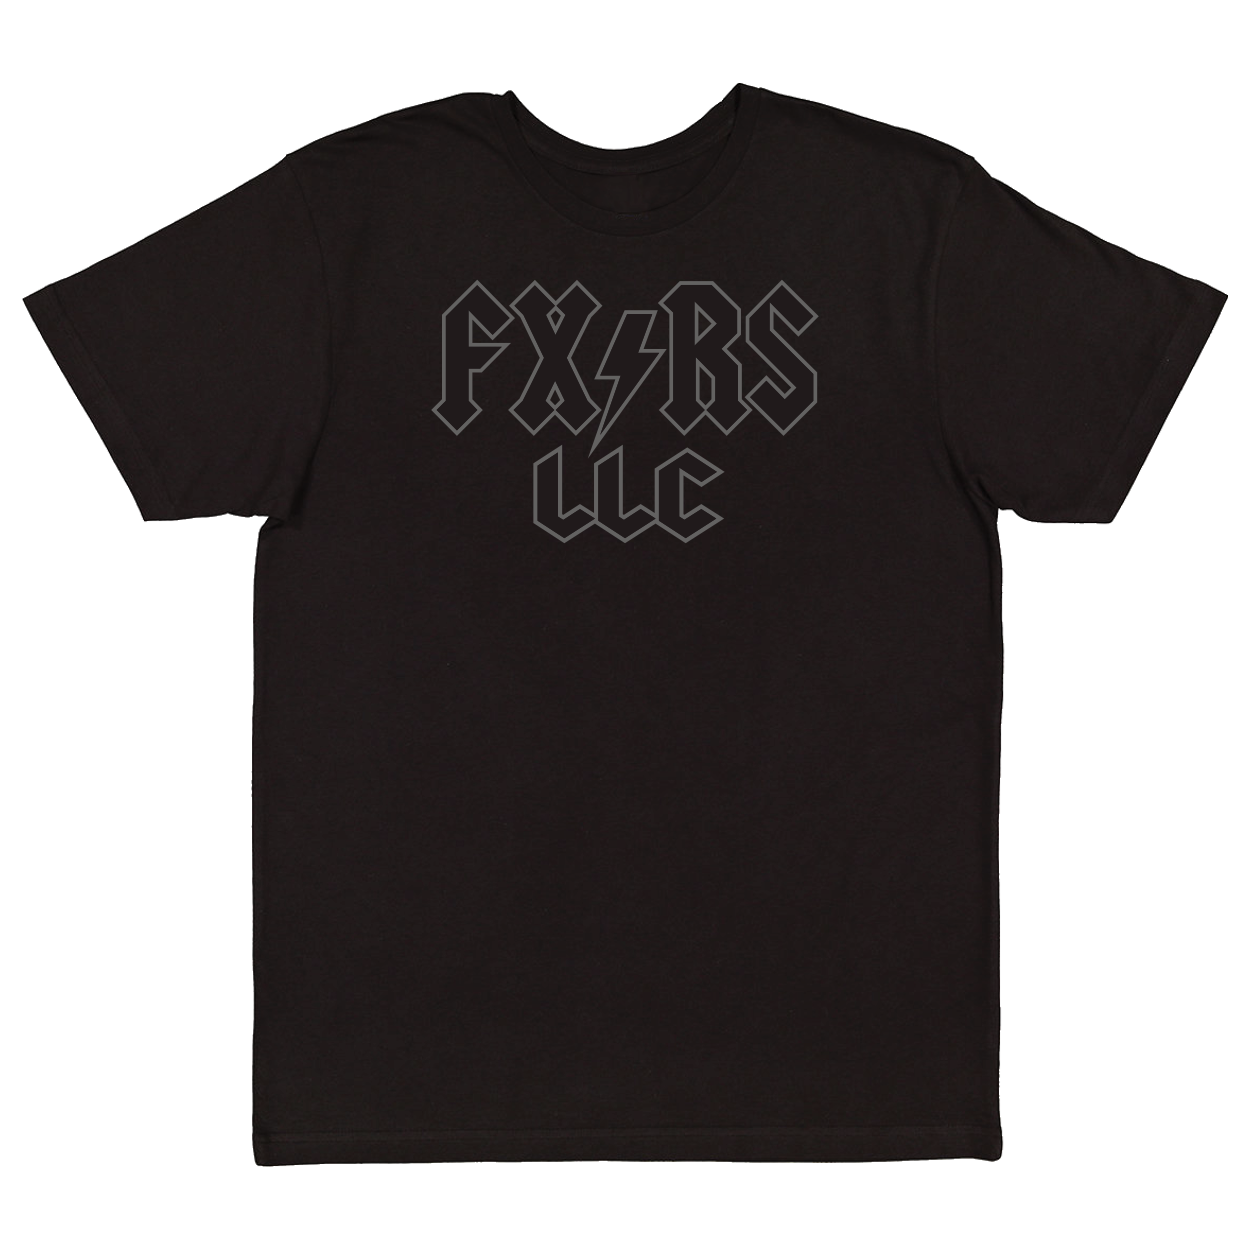 FX/RS LLC (T-Shirt)